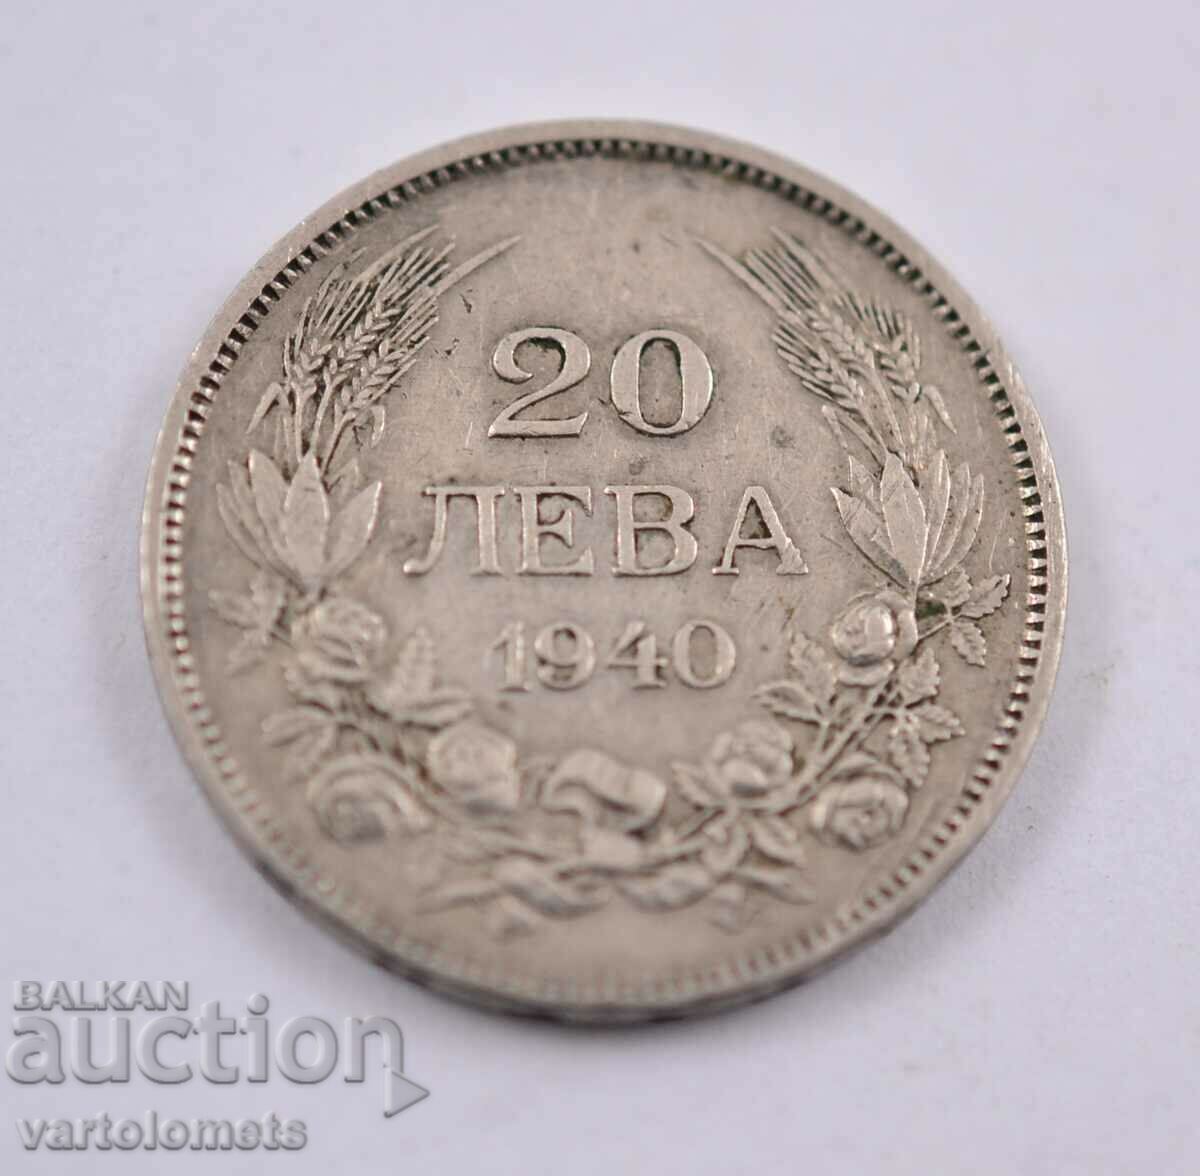 20 leva 1940 - Bulgaria Curioz - big A under the bust